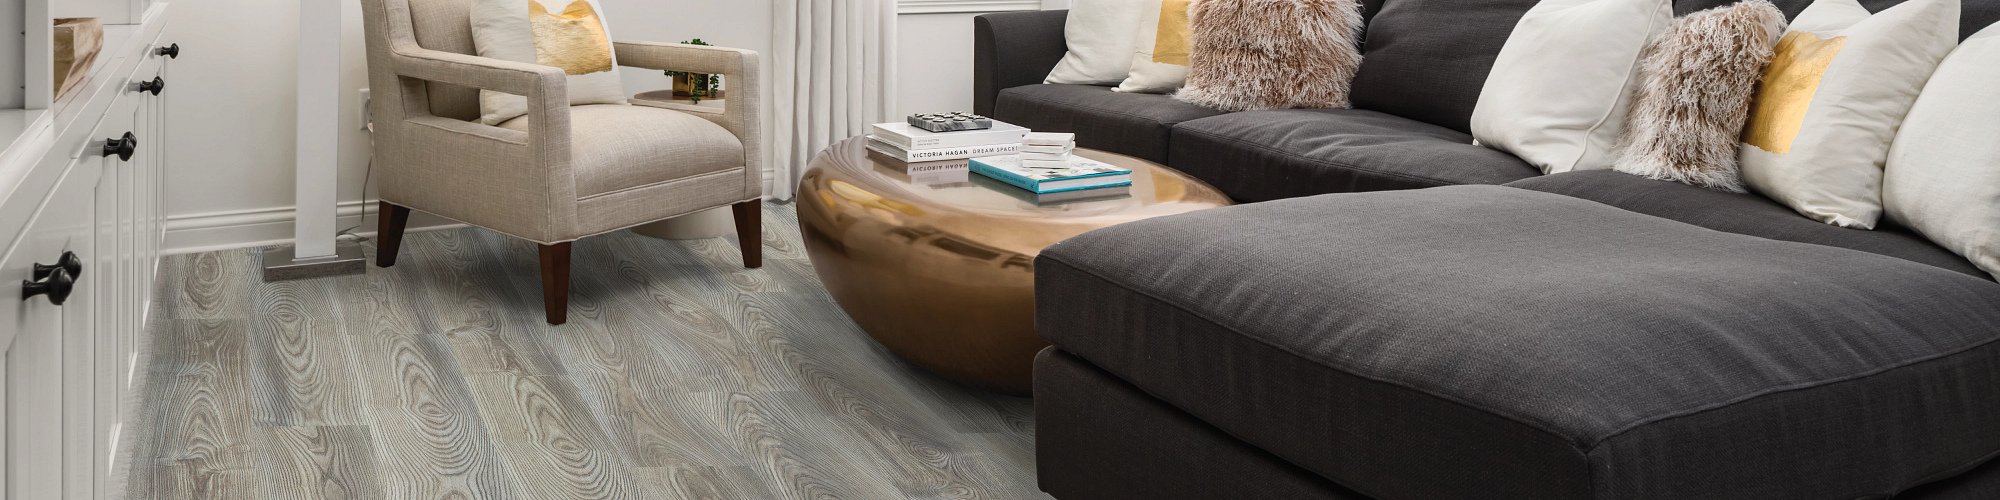 gray hardwood floor for living room from Expressway Carpet in Mobile, AL